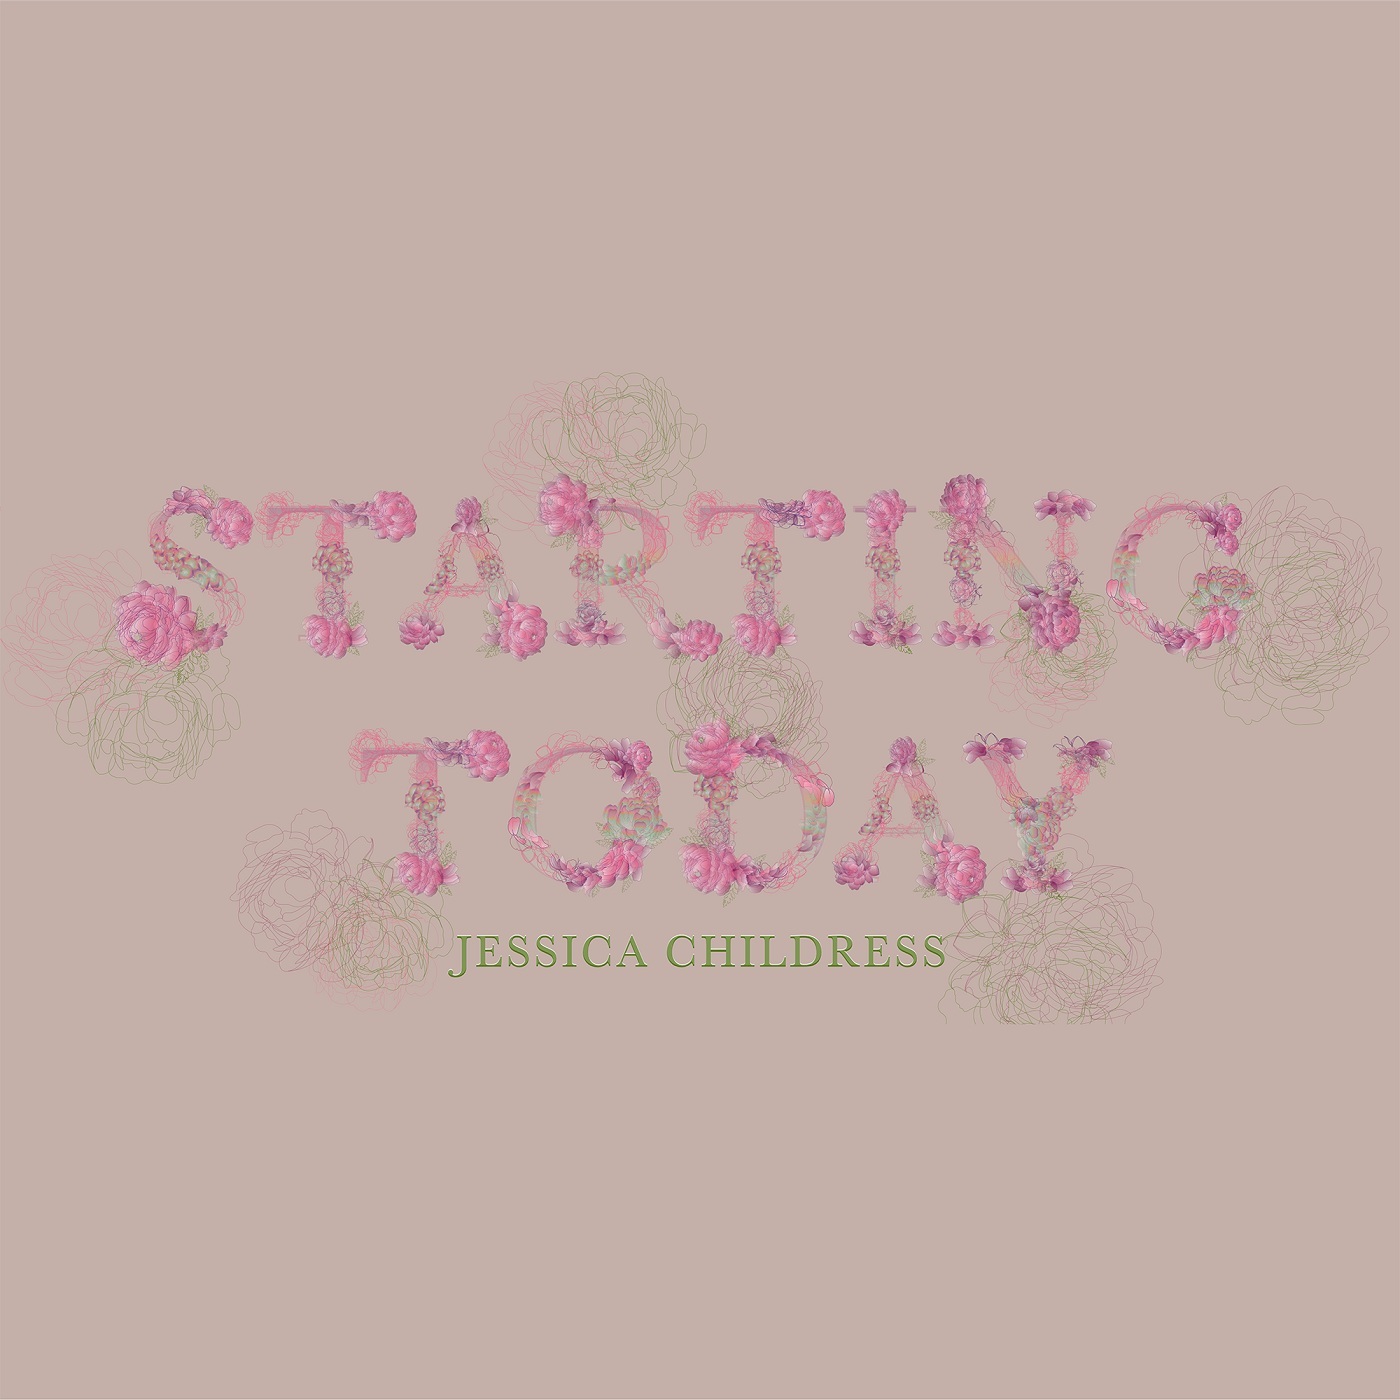 Starting Today - Jessica Childress